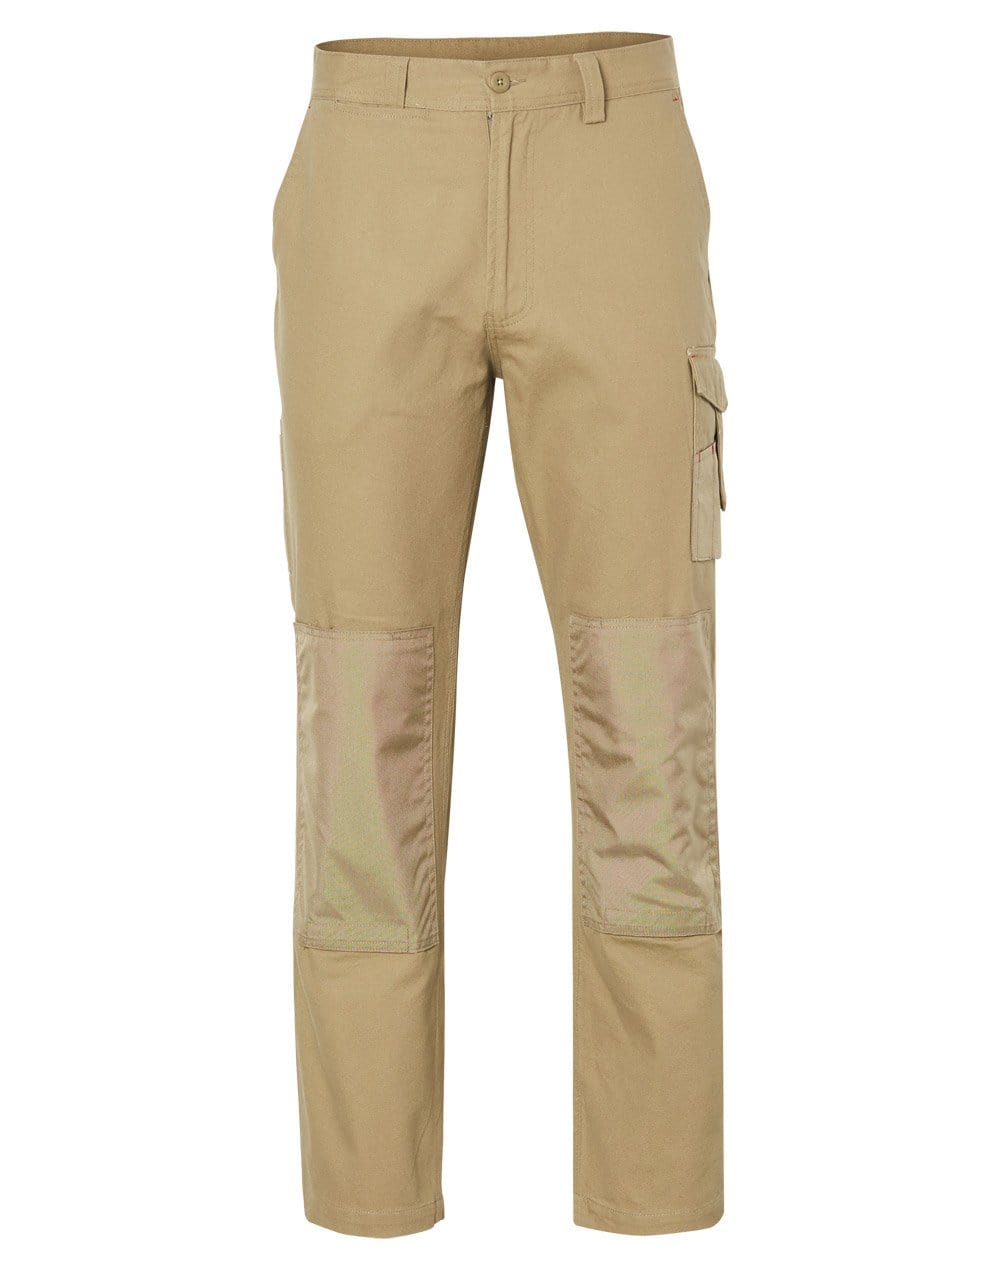 Cordura Durable Work Pants Stout Size WP17 Work Wear Australian Industrial Wear 87S Khaki 